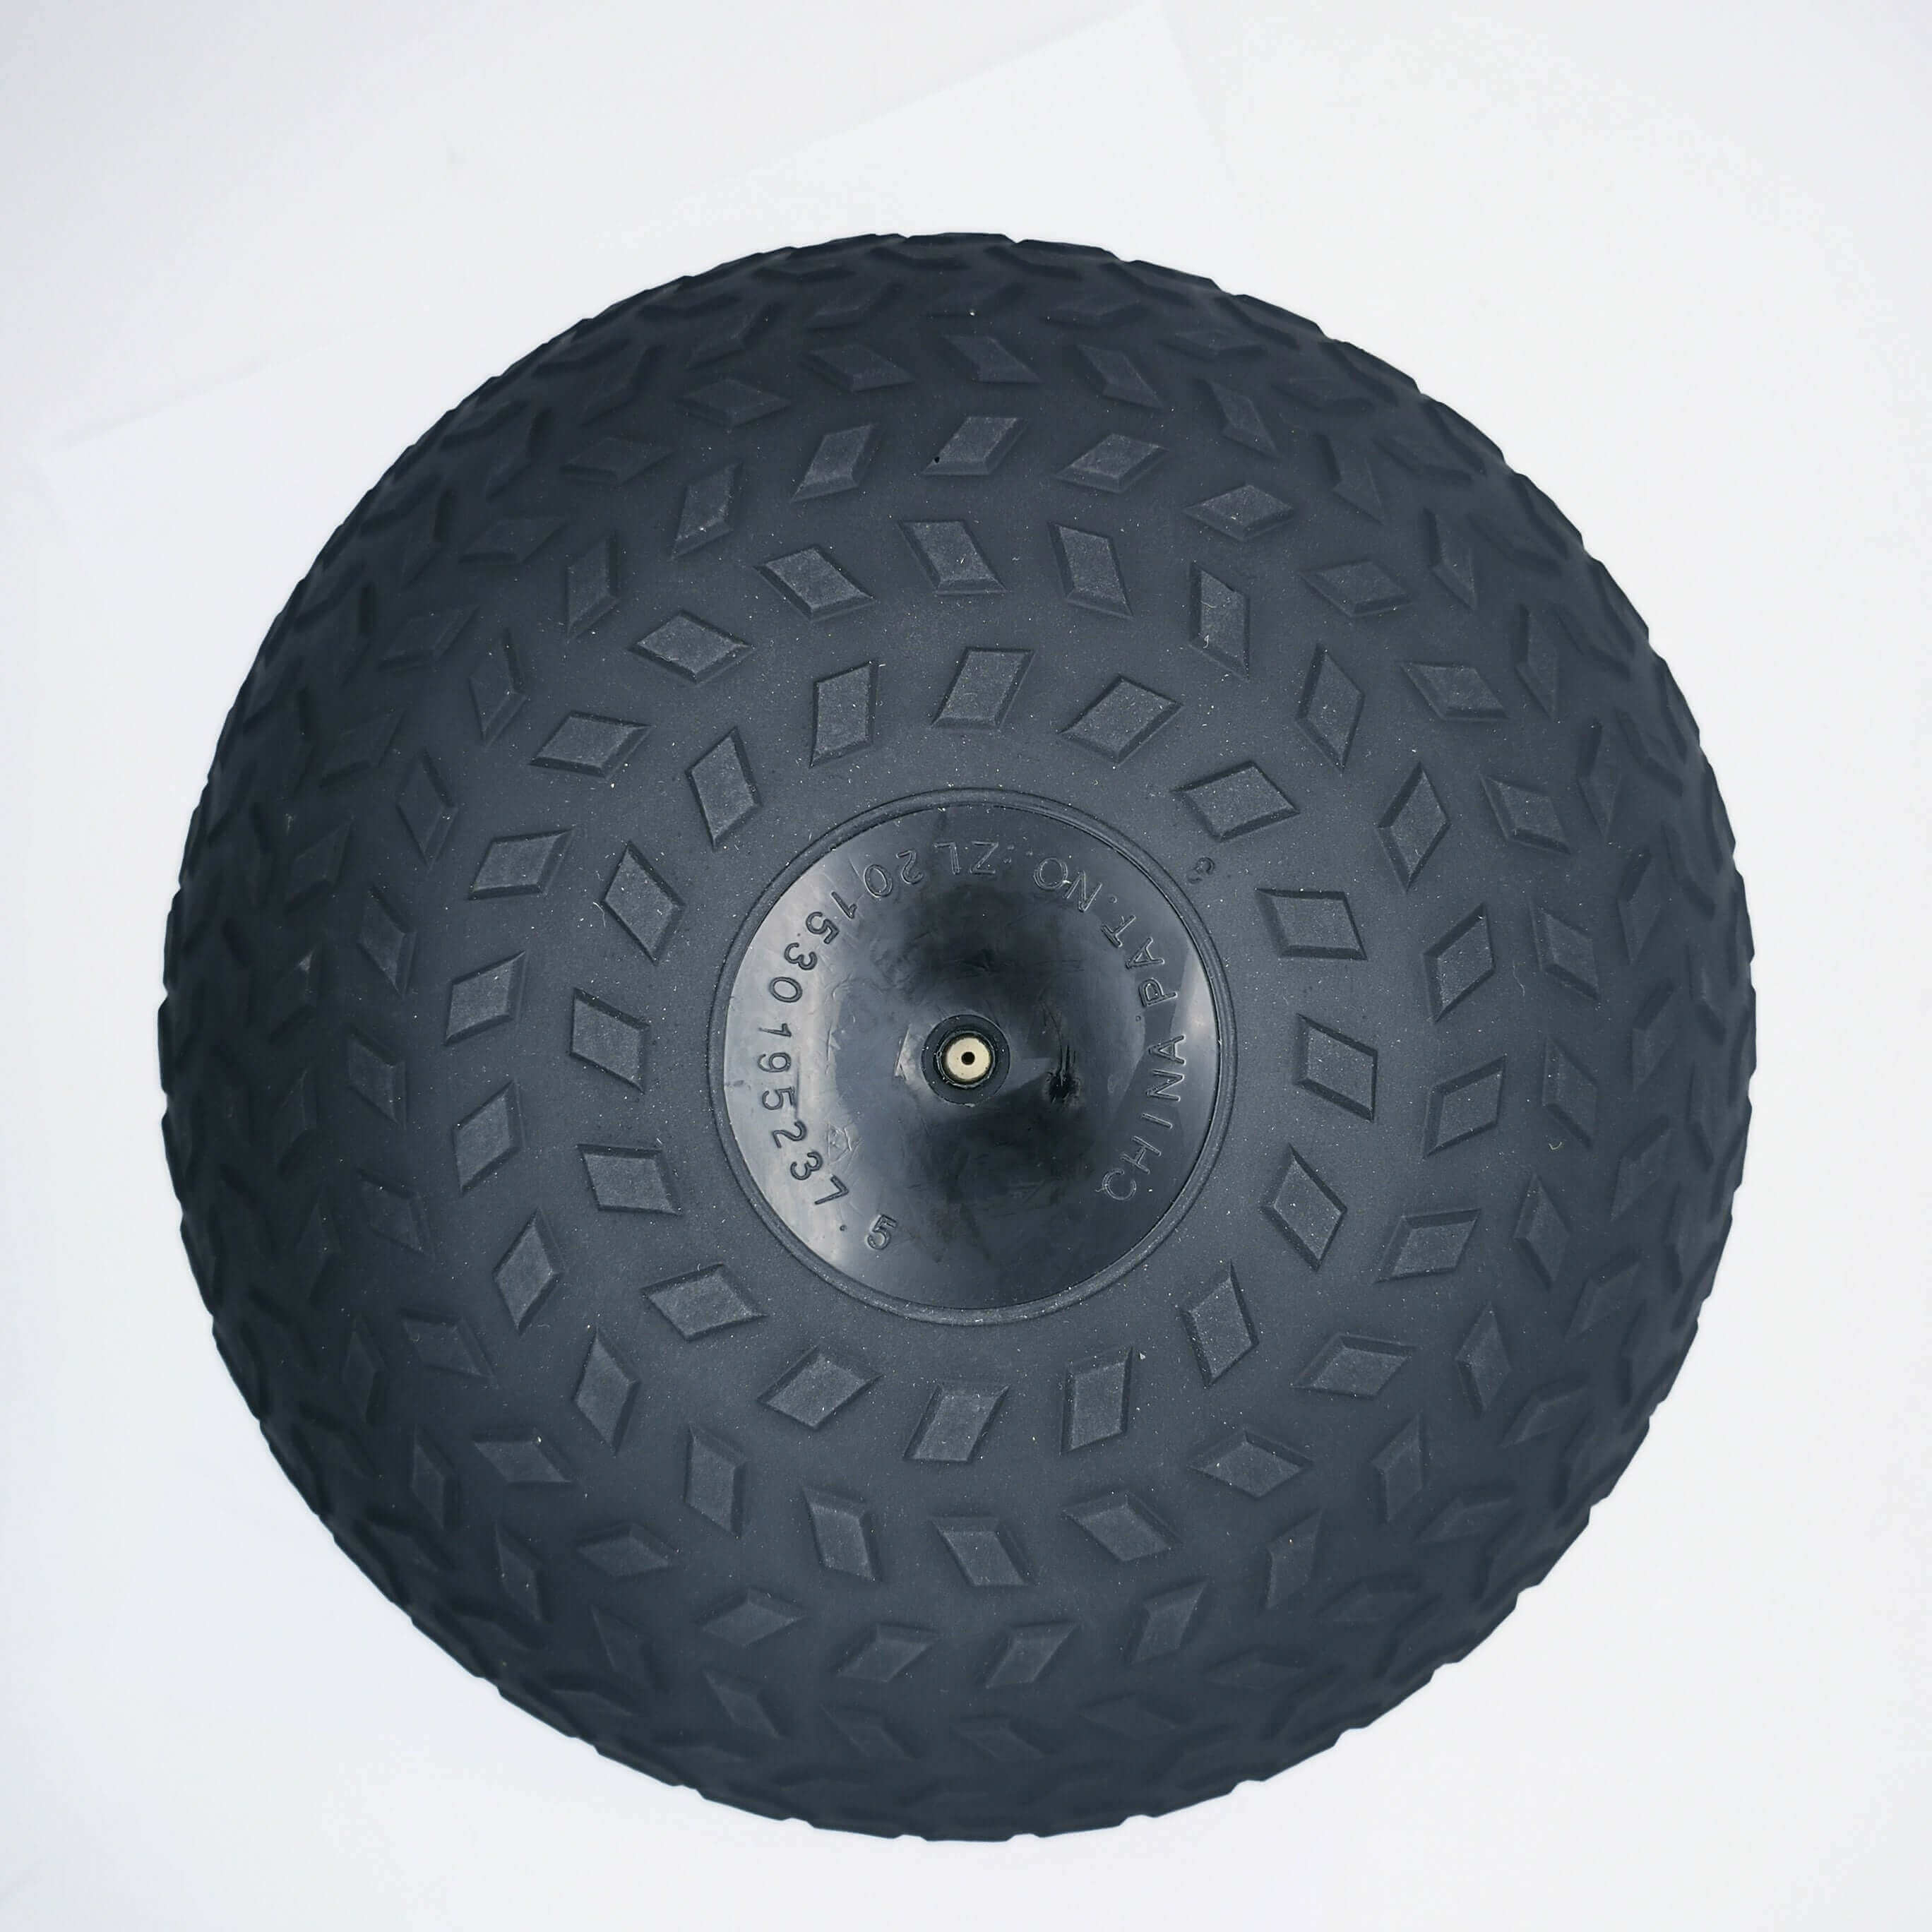 2kg Tyre Thread Slam Balls Fitness Exercise Sand Bag | INSOURCE